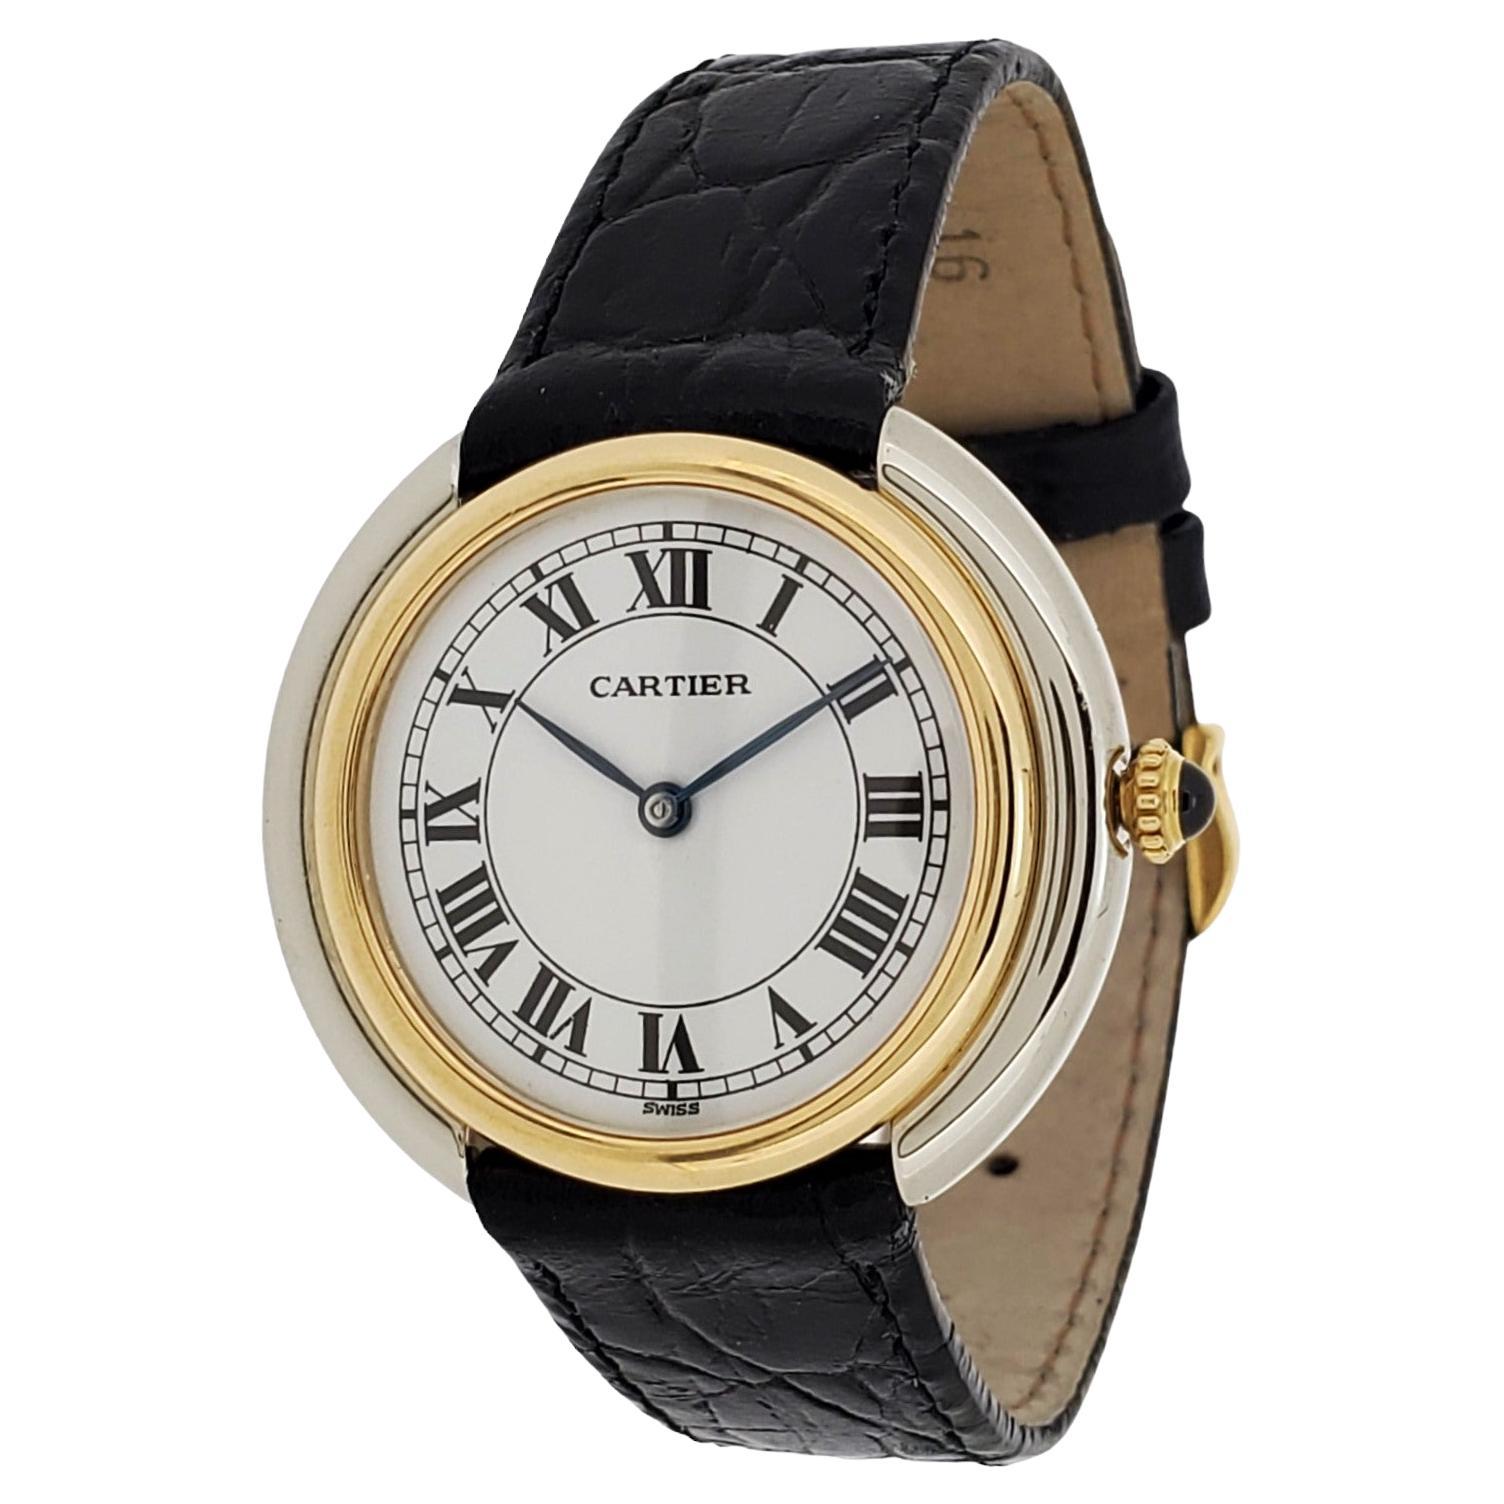 Cartier Paris Vendome 2-Tone Large Watch 34mm, Manual wind, Circa. 1973-1976 For Sale